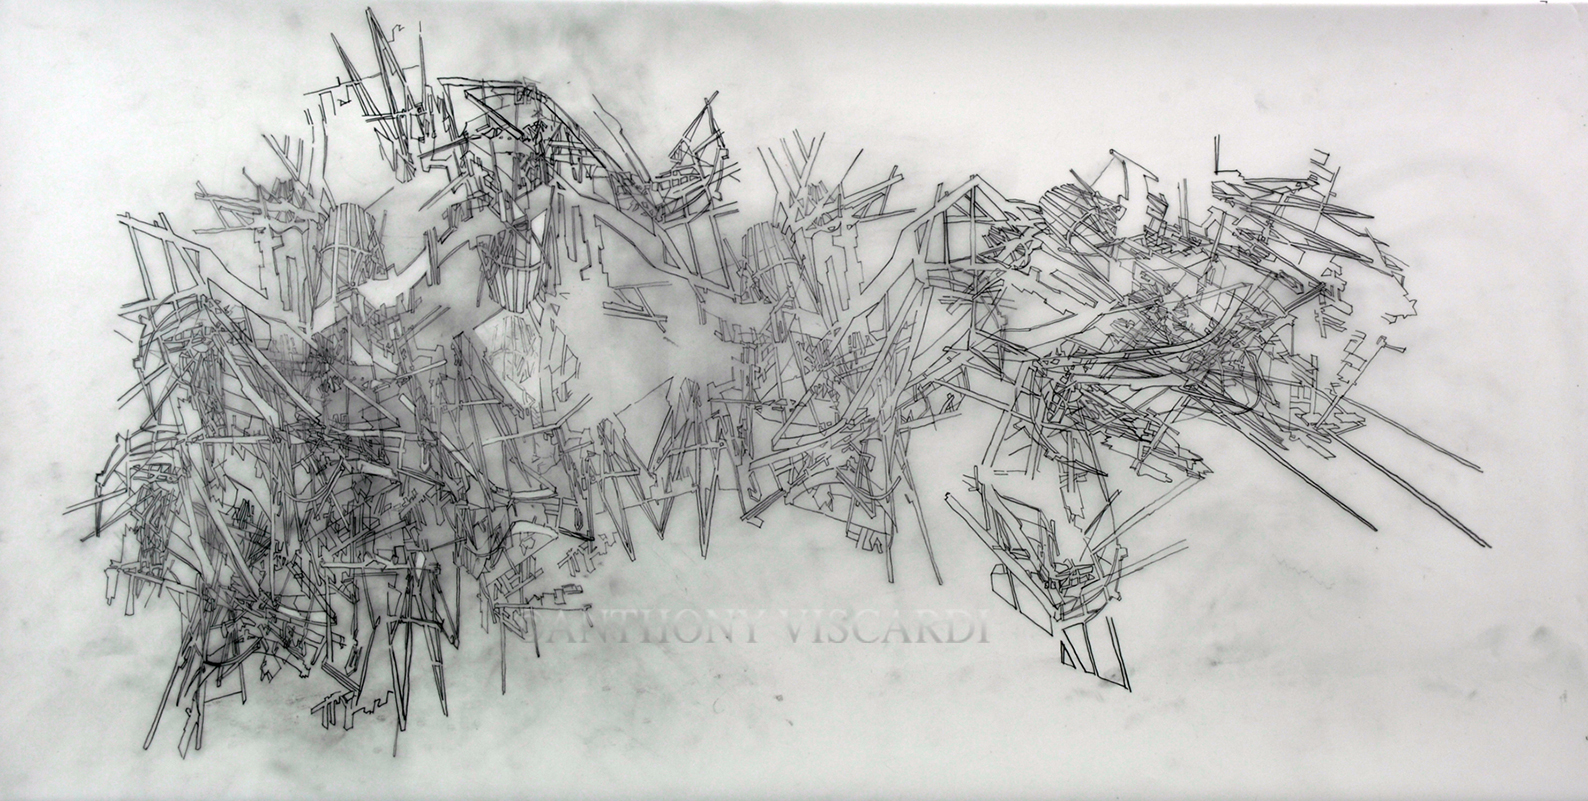 Lehigh University Anthony Viscardi drawing - Urbanistic Reverberation